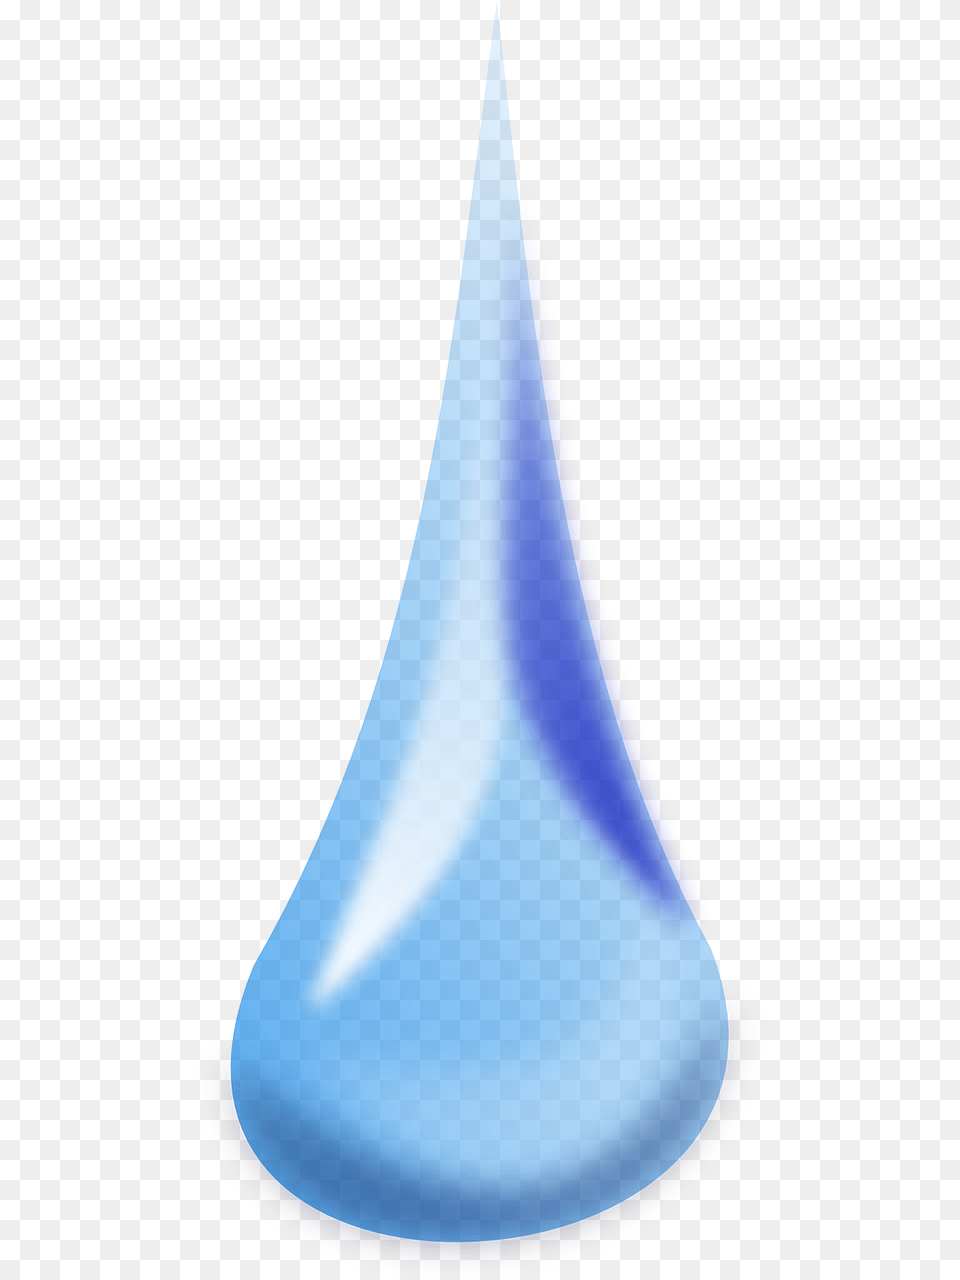 Drop Single Dew Water Droplet Image Drbe, Lighting Free Transparent Png